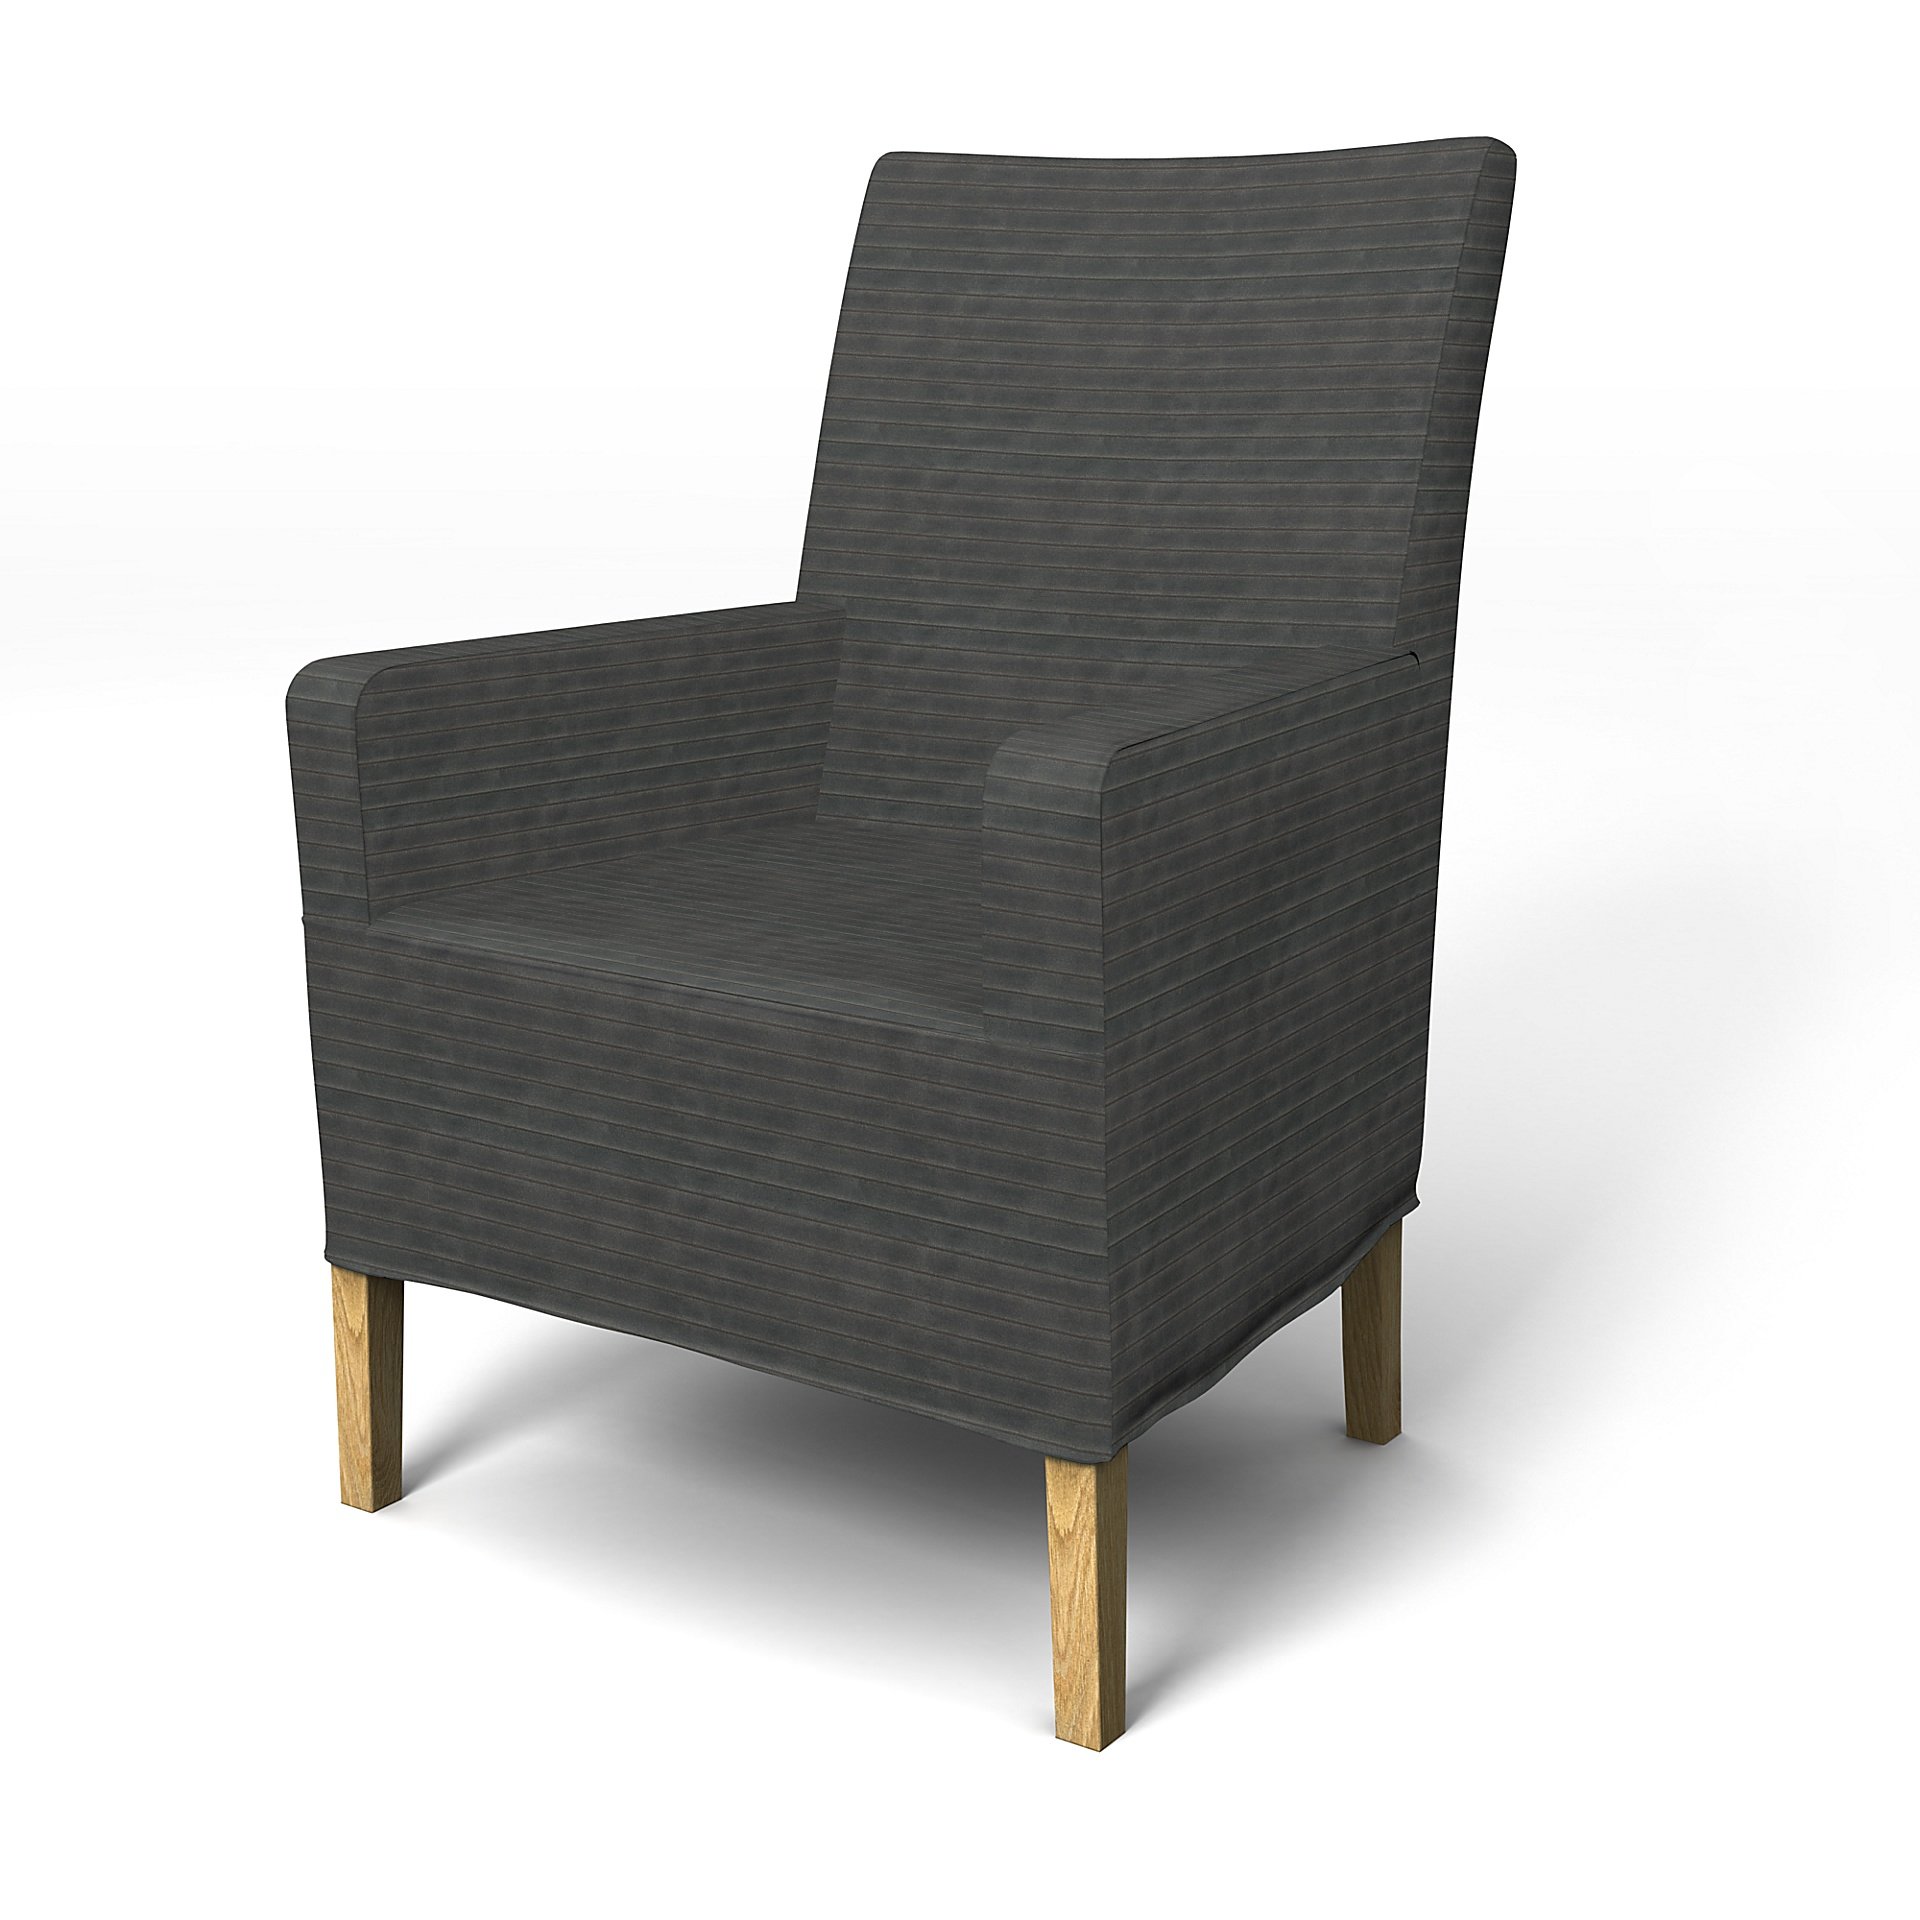 IKEA - Henriksdal, Chair cover w/ armrest, medium length skirt, Licorice, Corduroy - Bemz